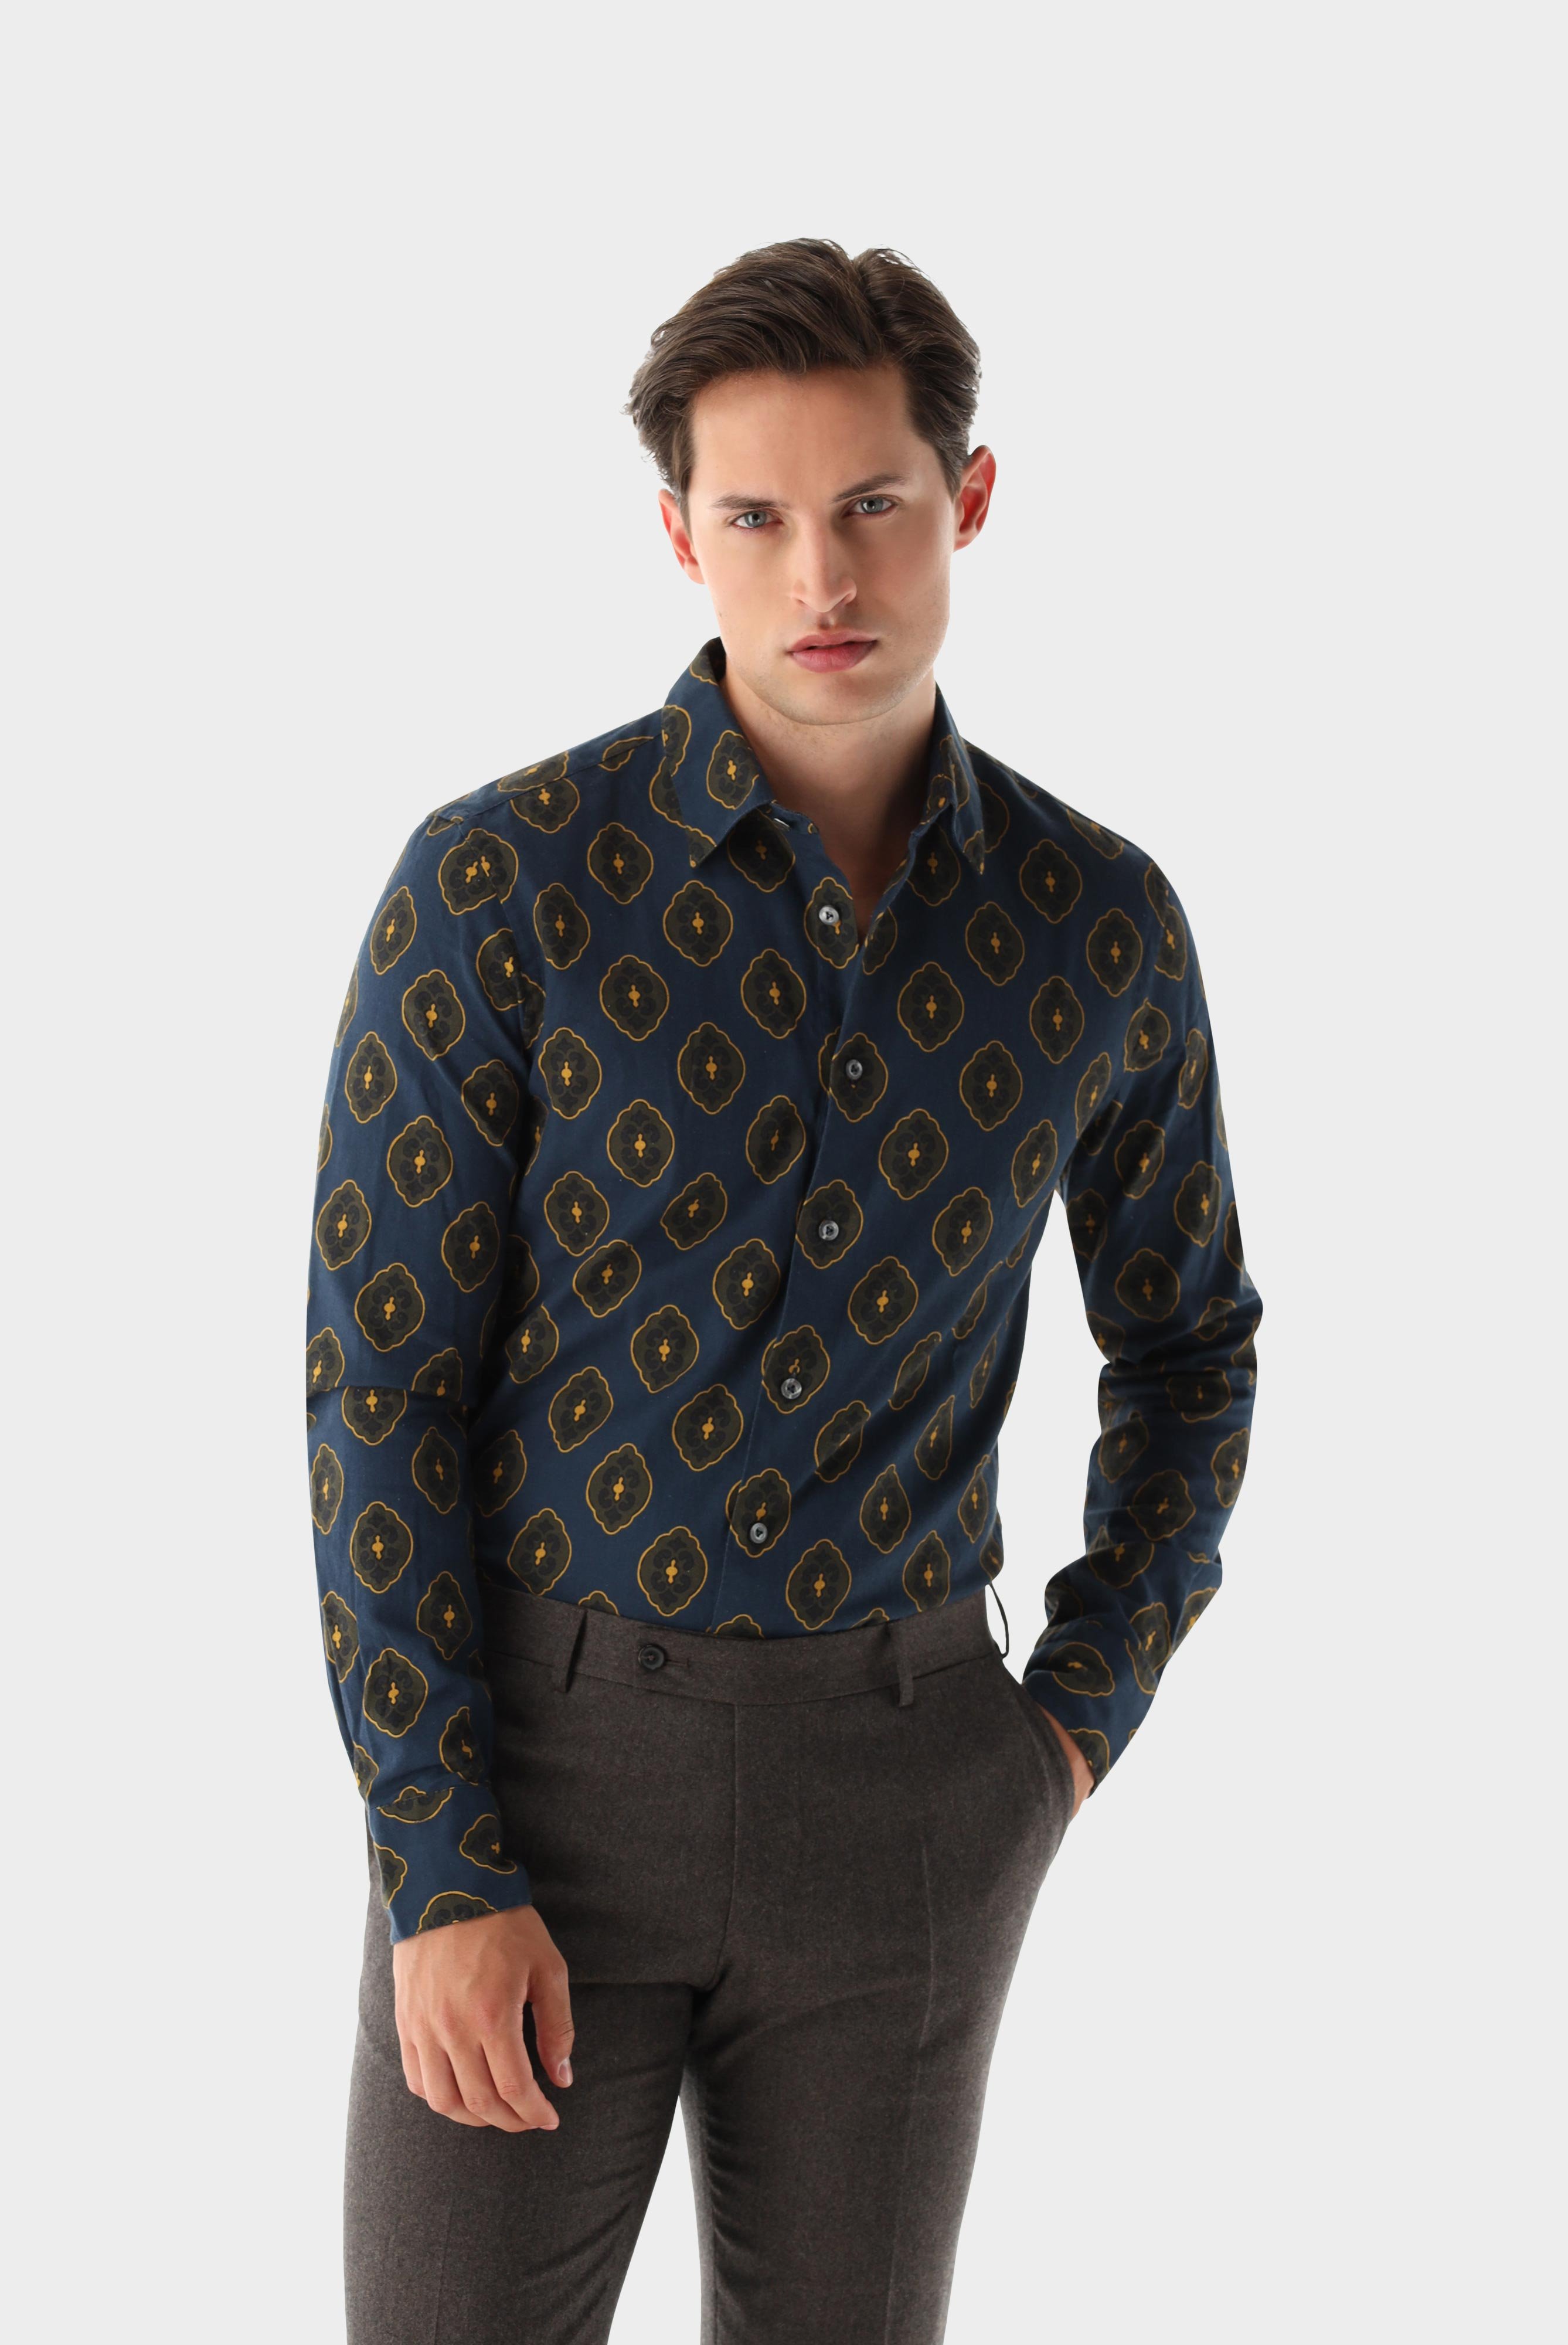 Casual Hemden+Vintage Twill Hemd Tailor Fit+20.2086.MB.172031.789.39